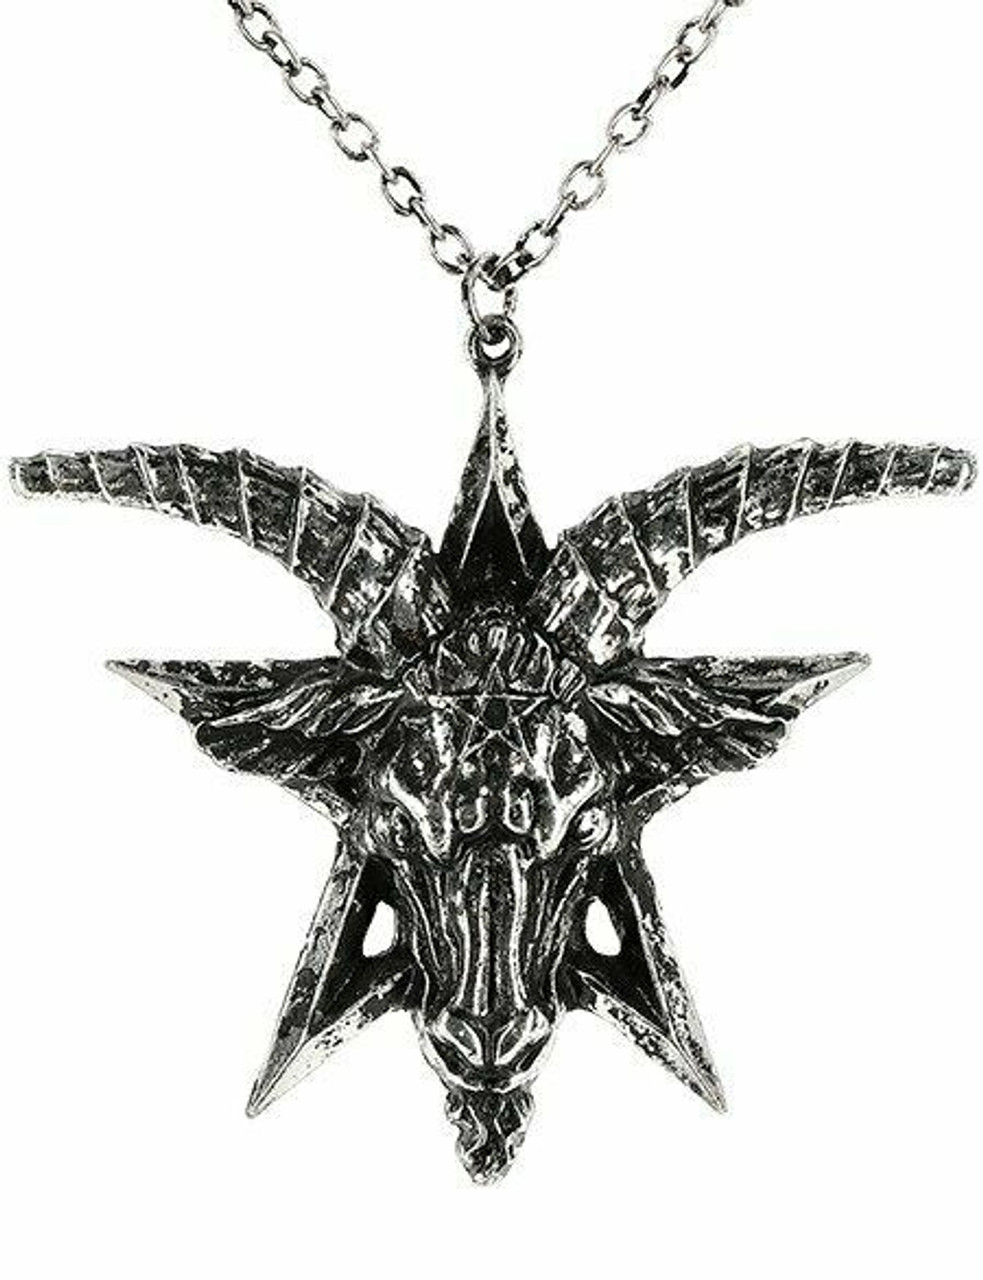 Tattoo Style Illustrated Occult Illustration Wicca Satanic Gift For Him 6oz Flask Satanic Goat Baphomet Matte Black Engraved Hip Flask